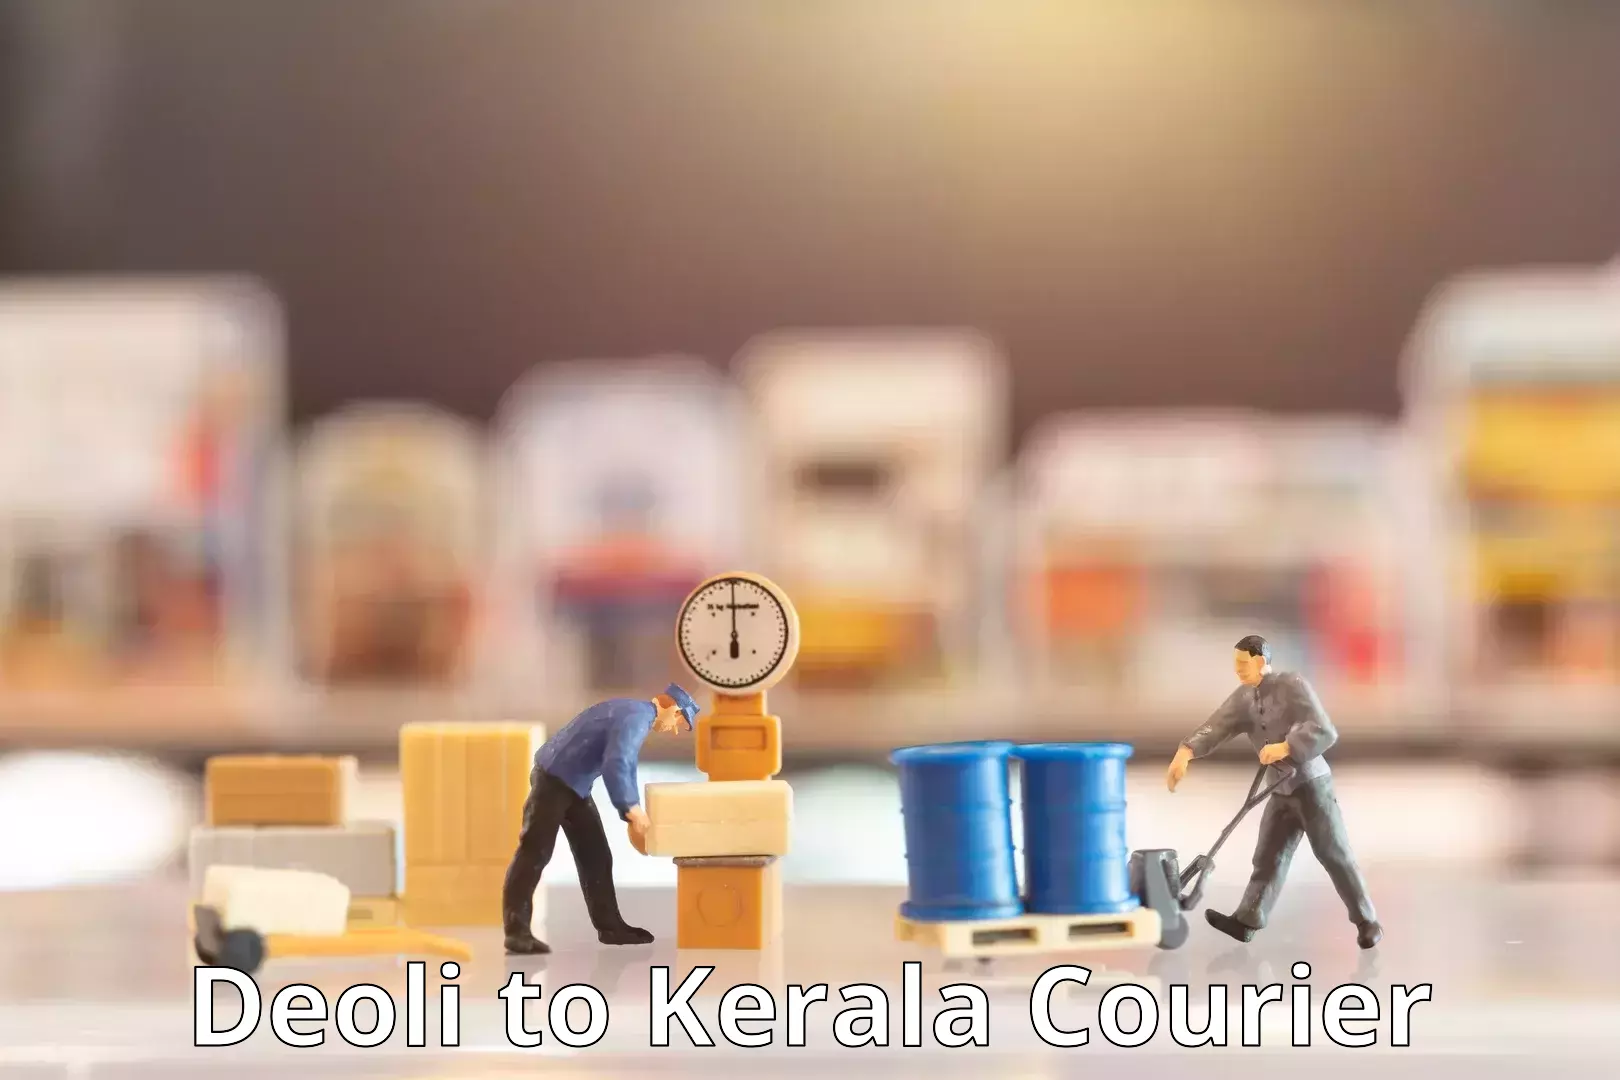 Quick booking process in Deoli to Kerala